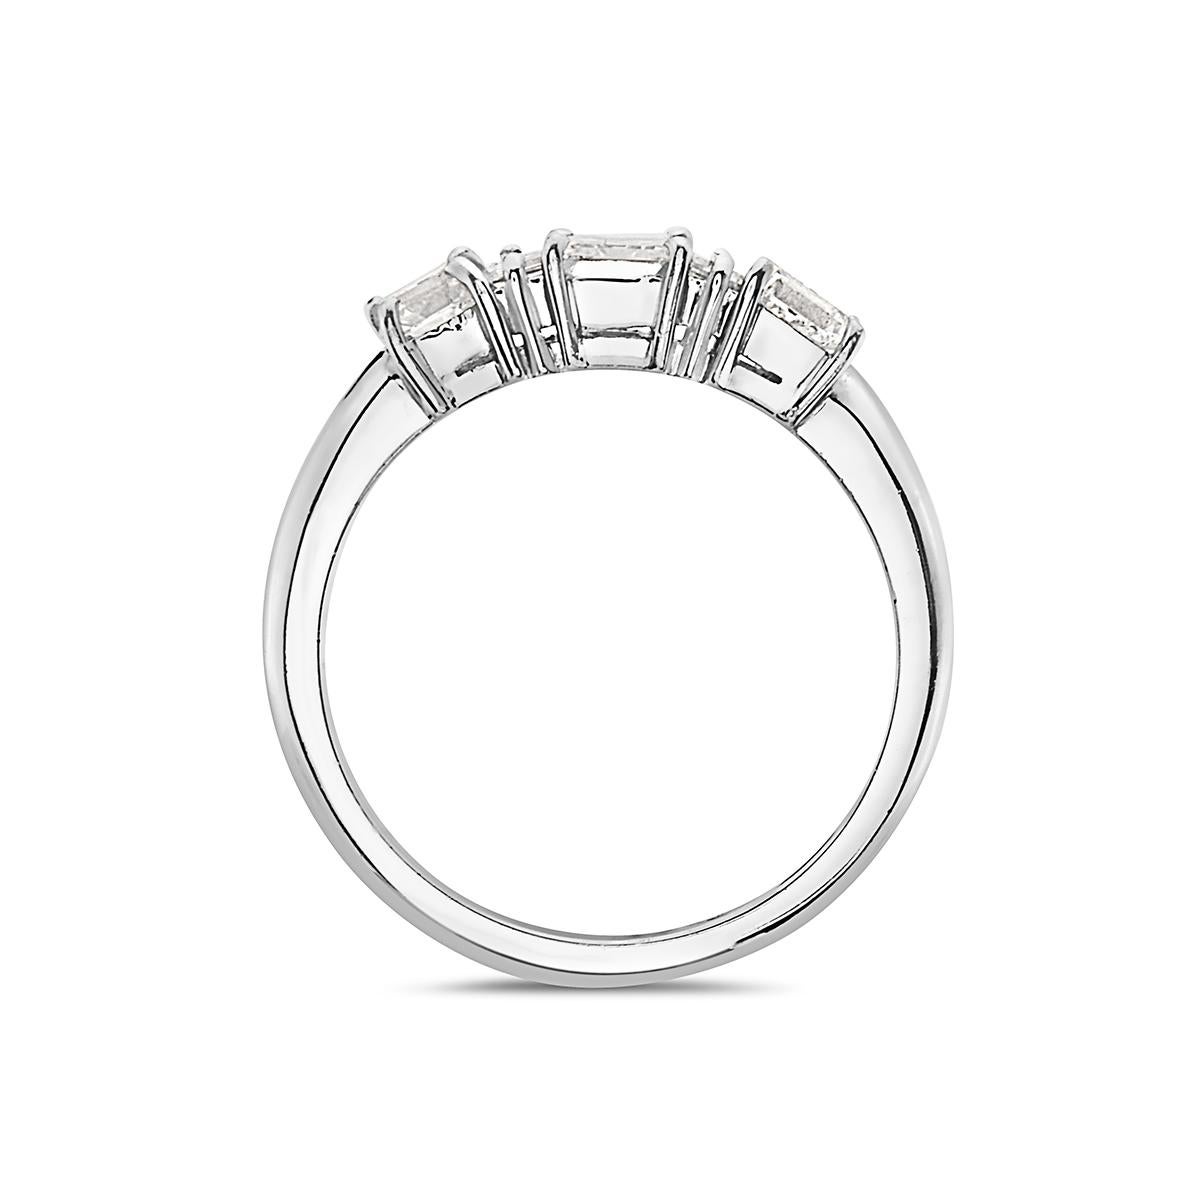 5 stone engagement ring